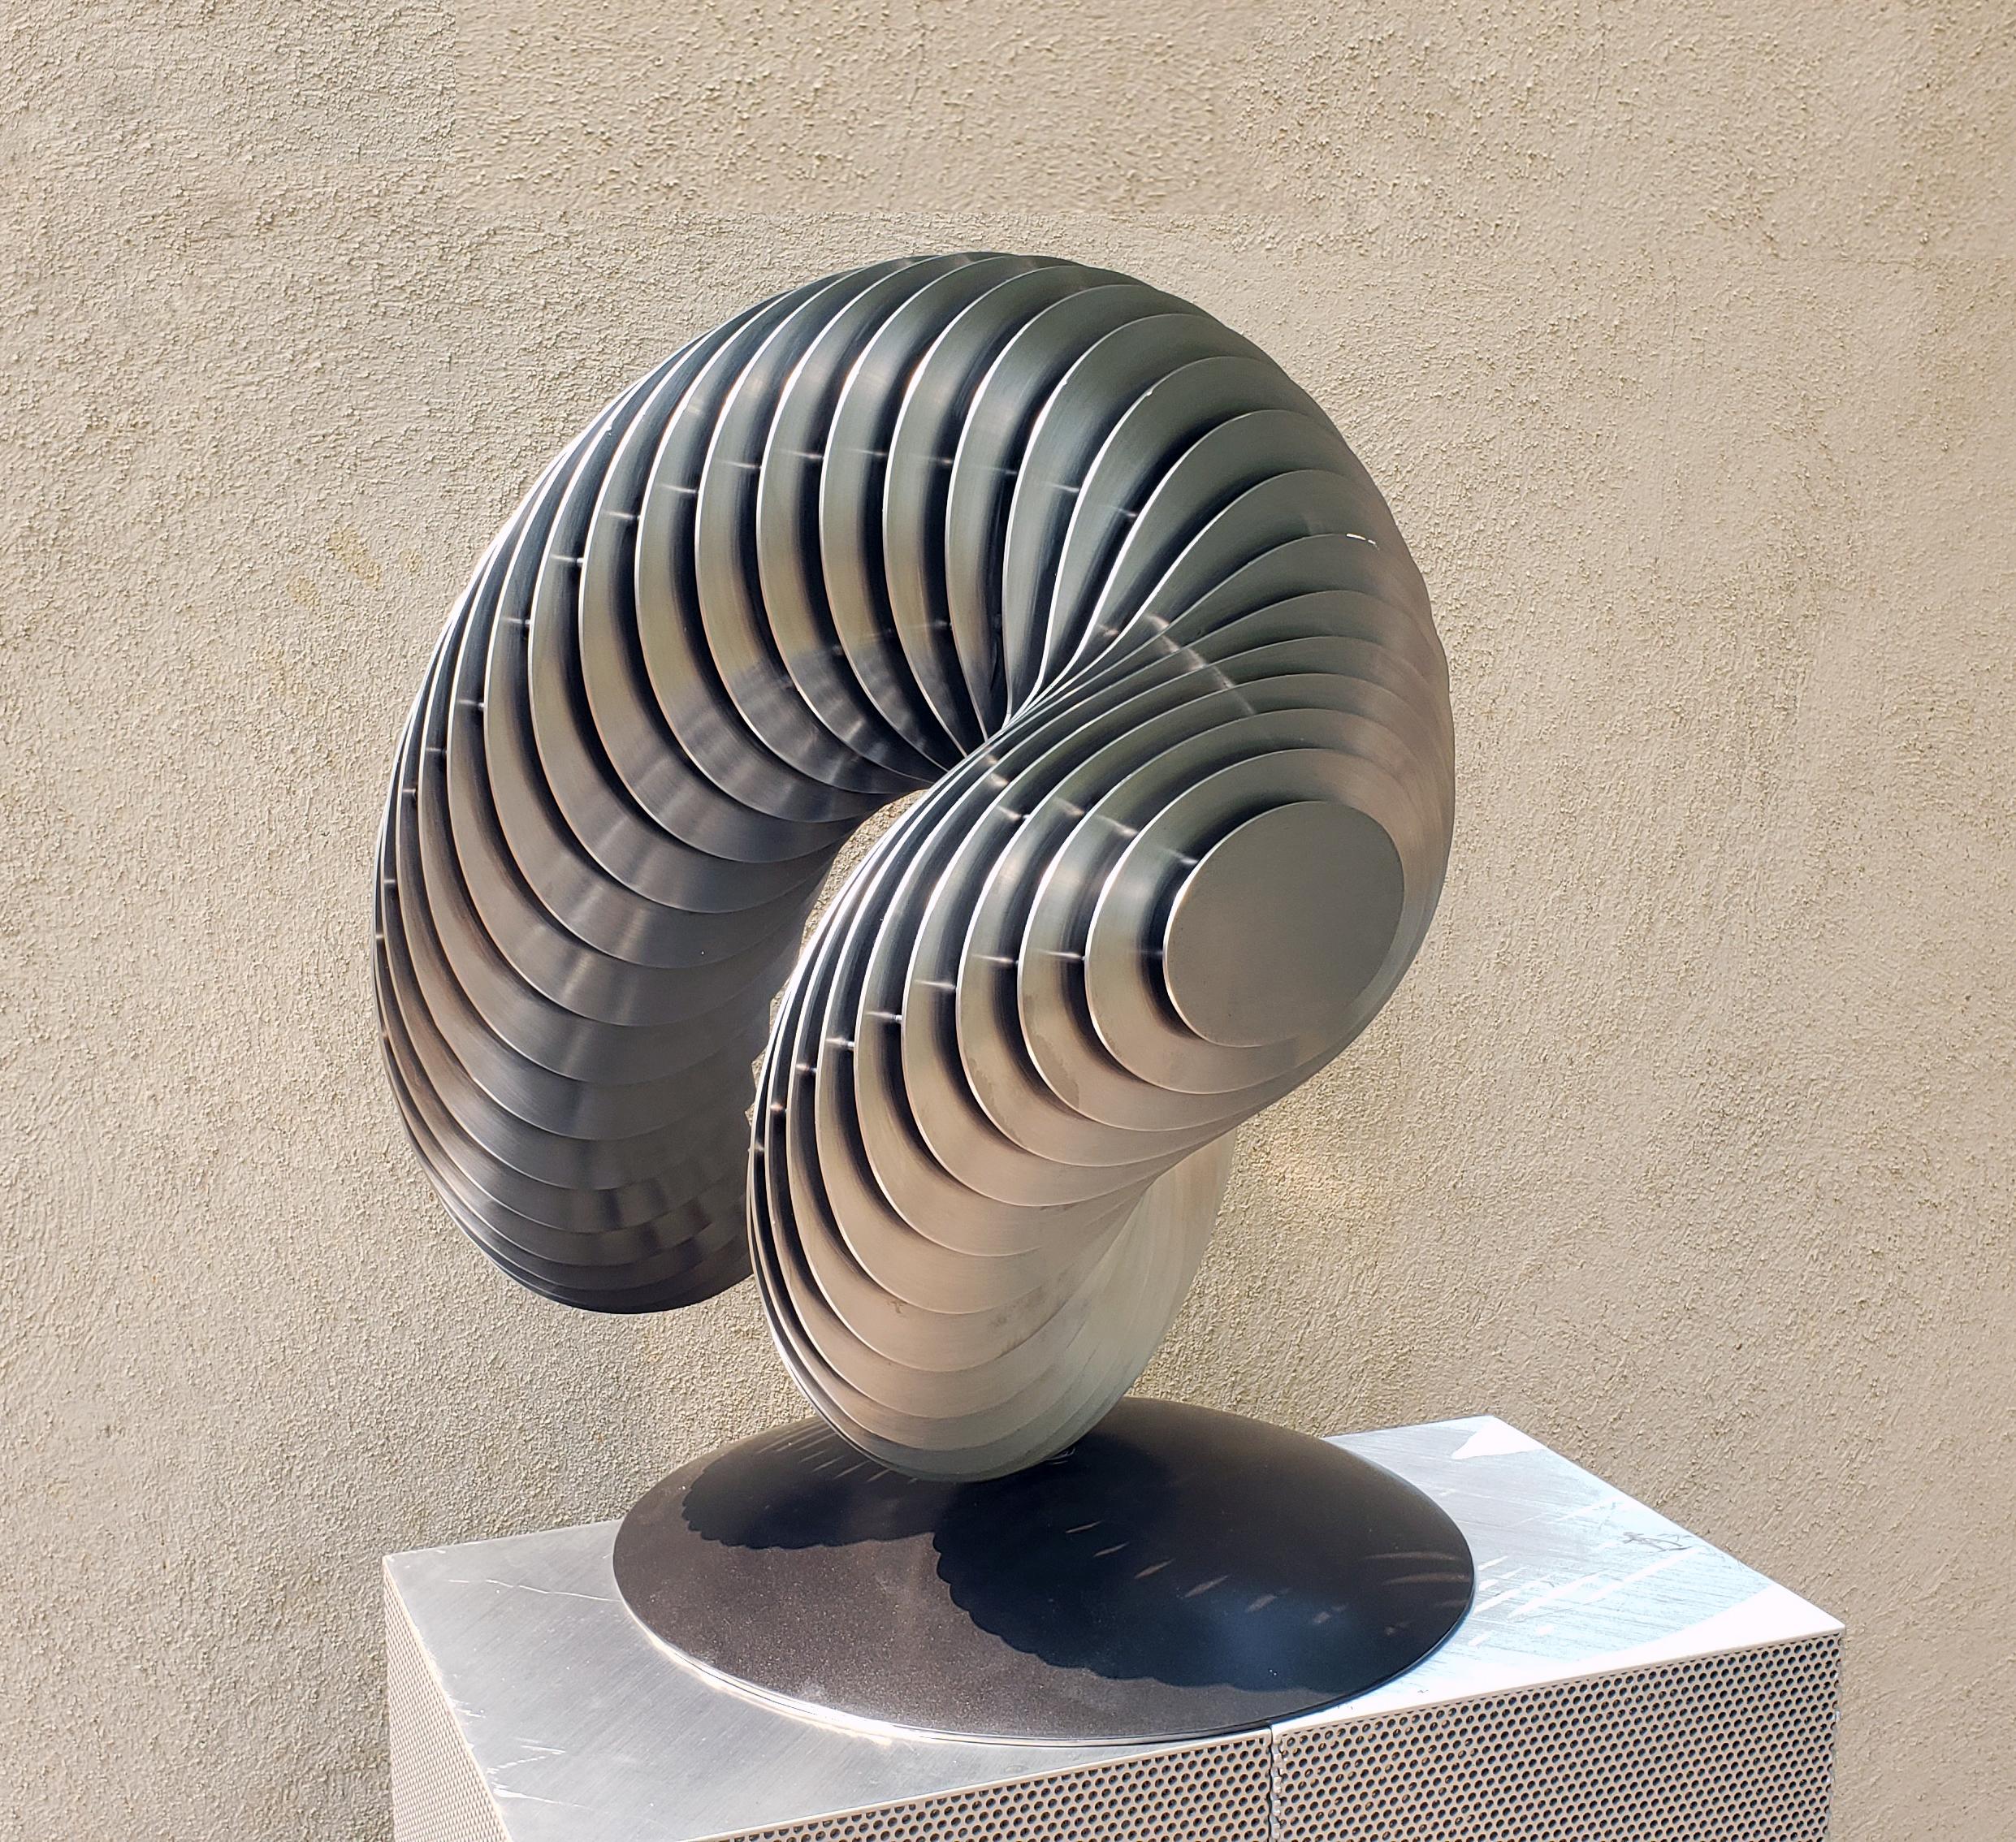 Yin Yang - Sculpture by Lyle London